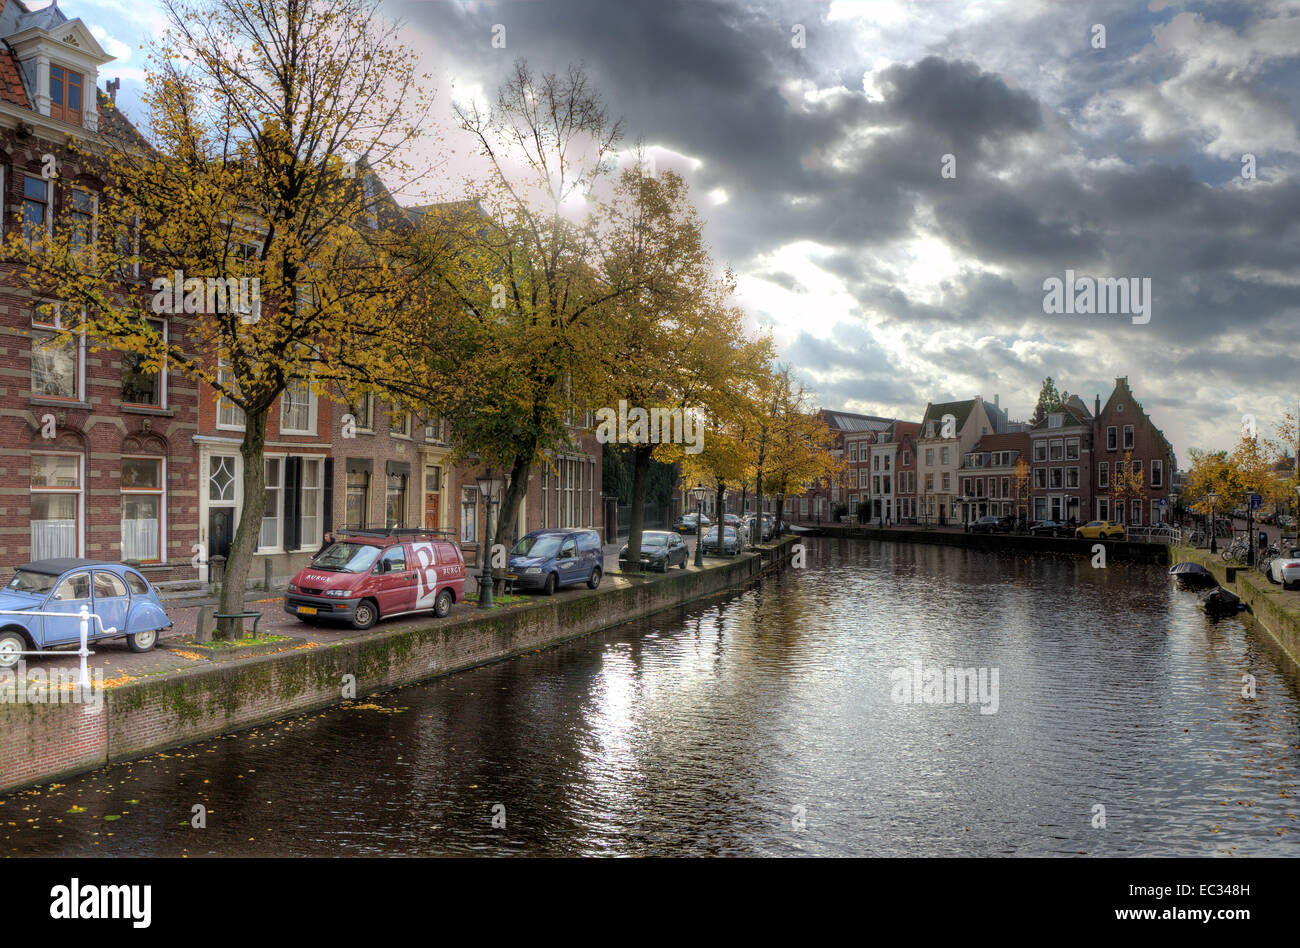 LEIDEN, Paesi Bassi - 23 ottobre: le vie navigabili e la tipica architettura olandese il 23 ottobre 2013 in Leiden, Paesi Bassi. Leiden è Foto Stock